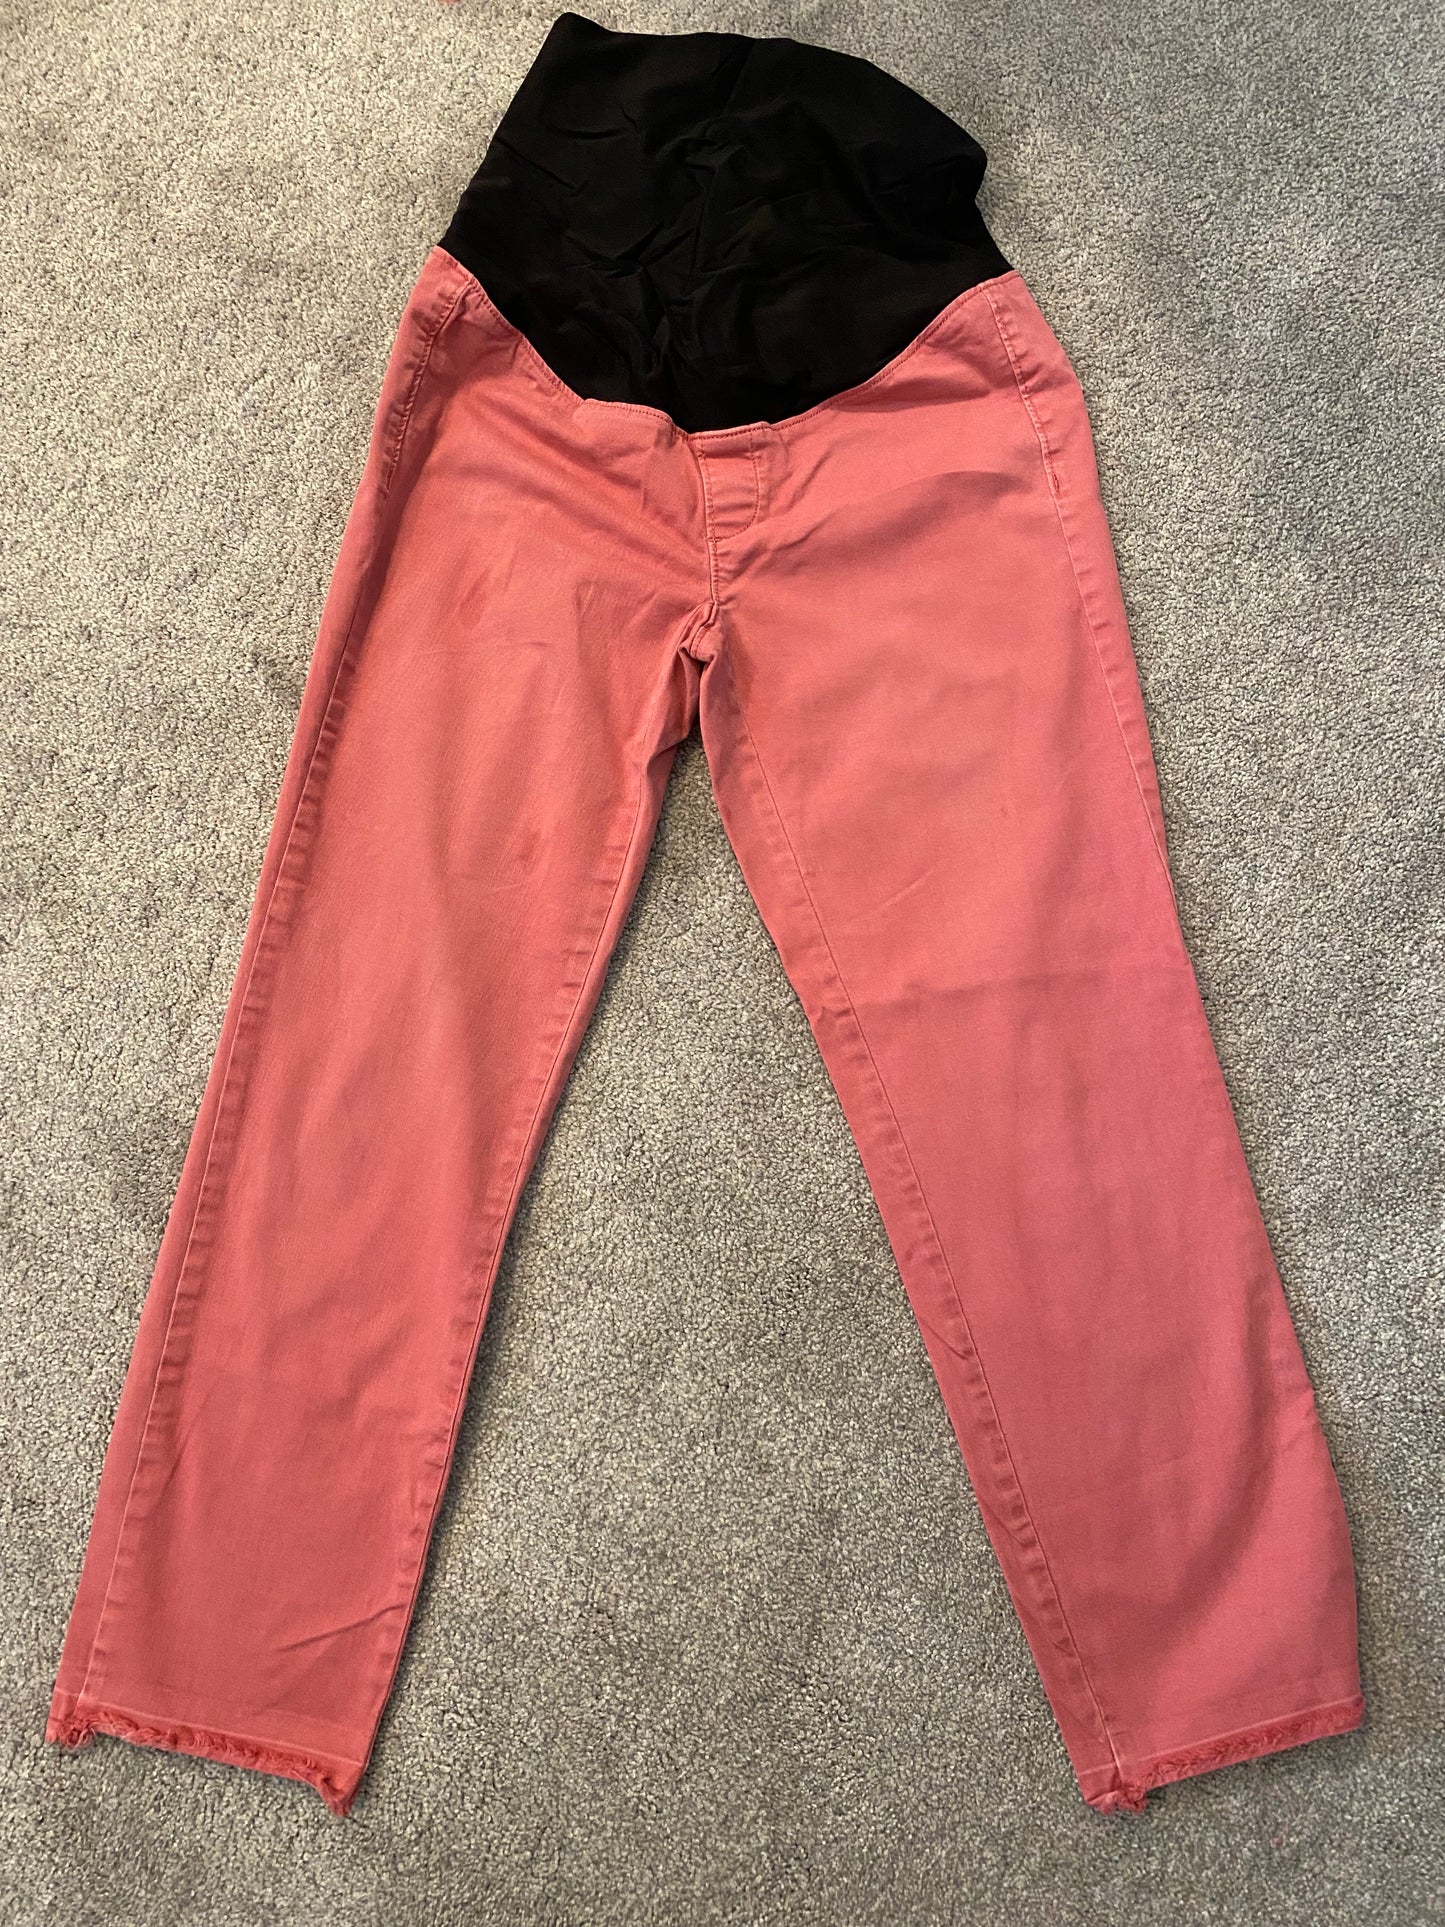 Loft Maternity  pink pants size 4